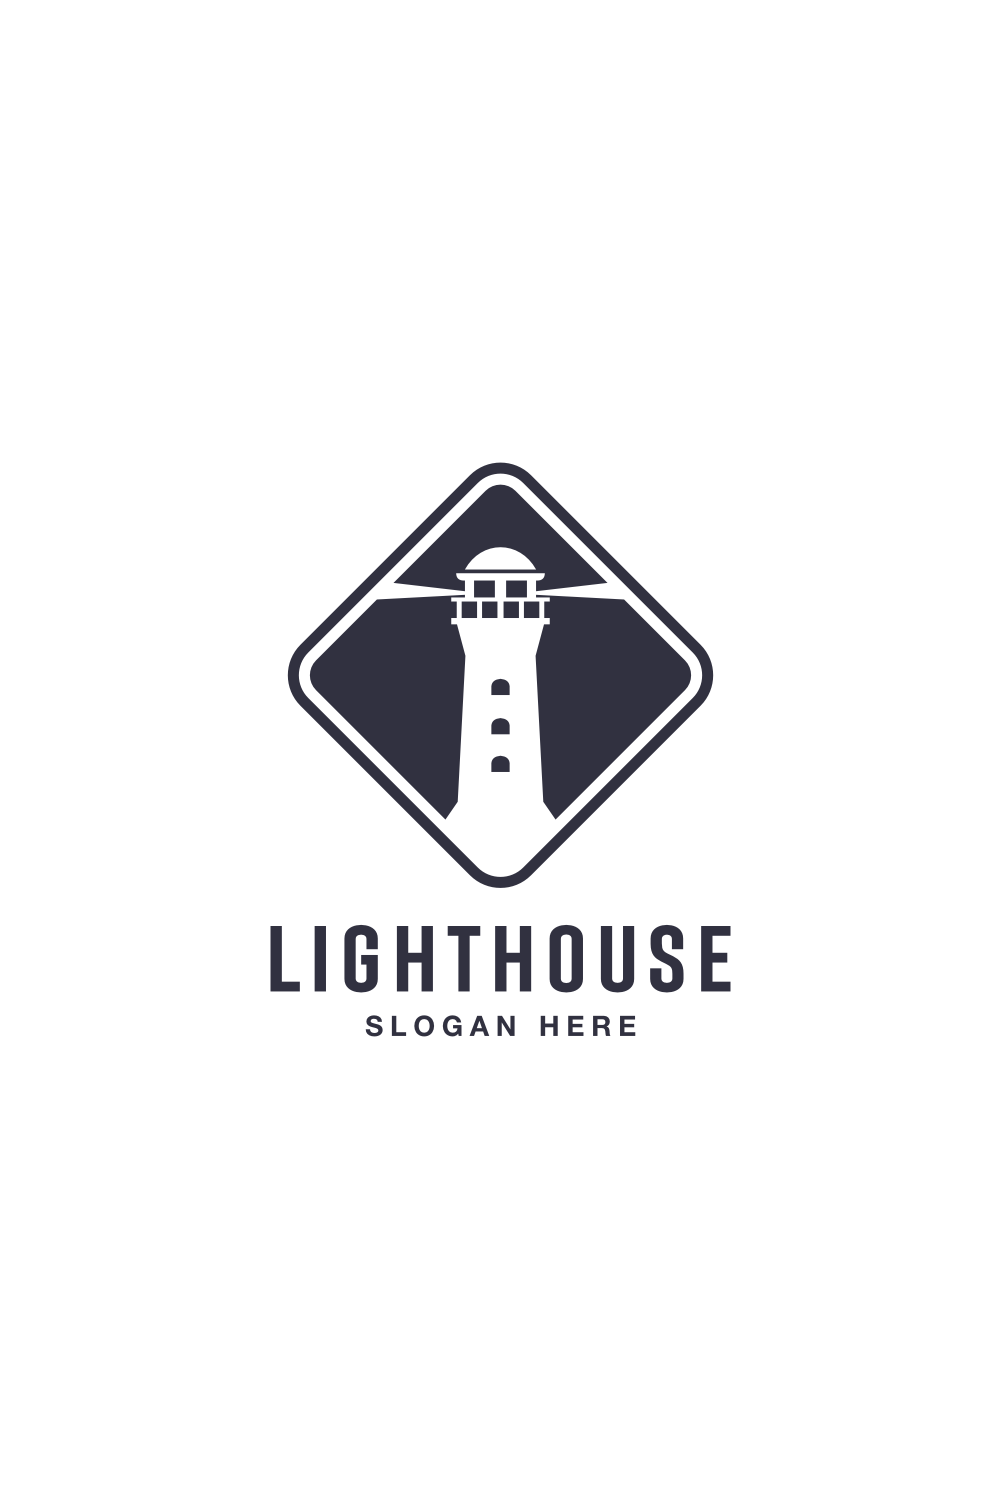 Lighthouse Tower Simple Logo Design pinterest image.